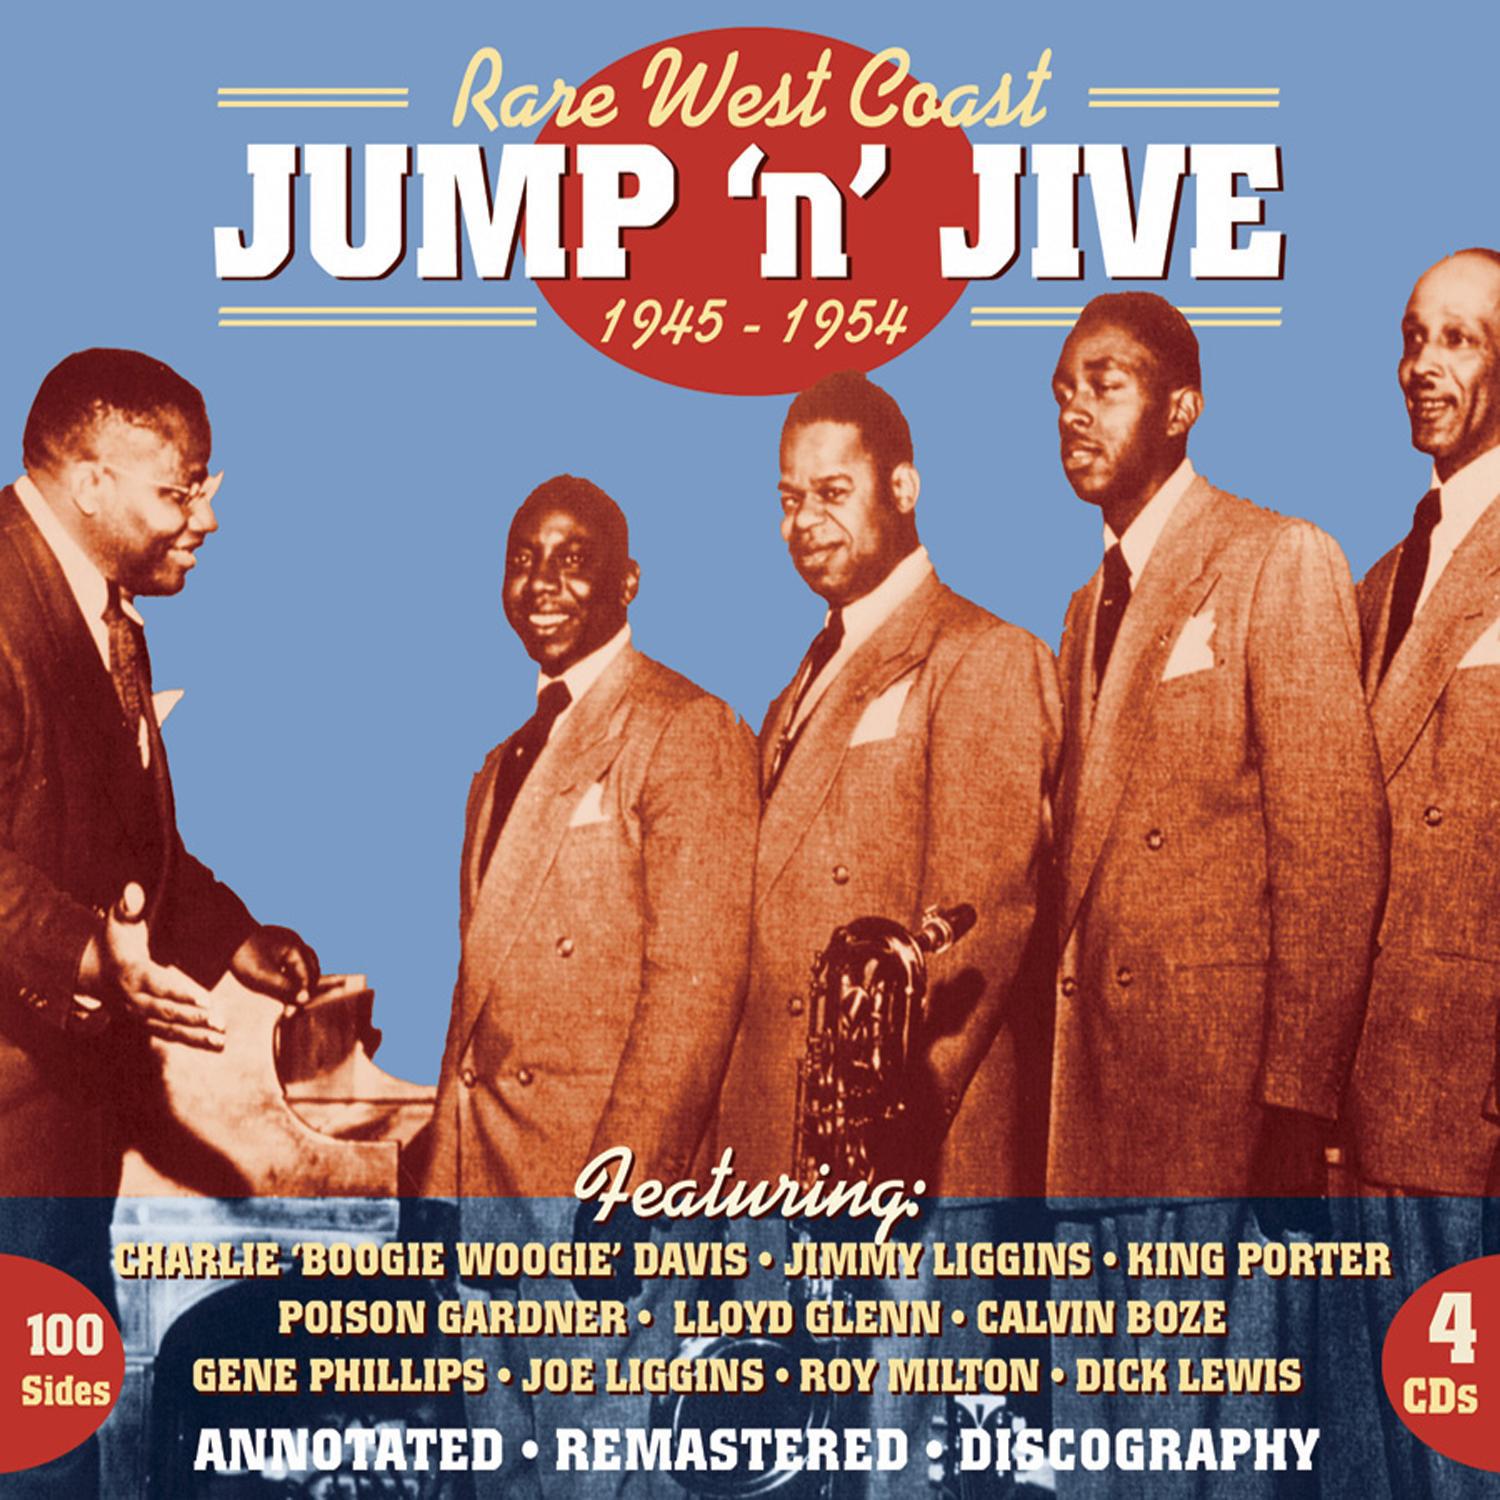 Rare West Coast Jump 'n' Jive 1945 - 1954